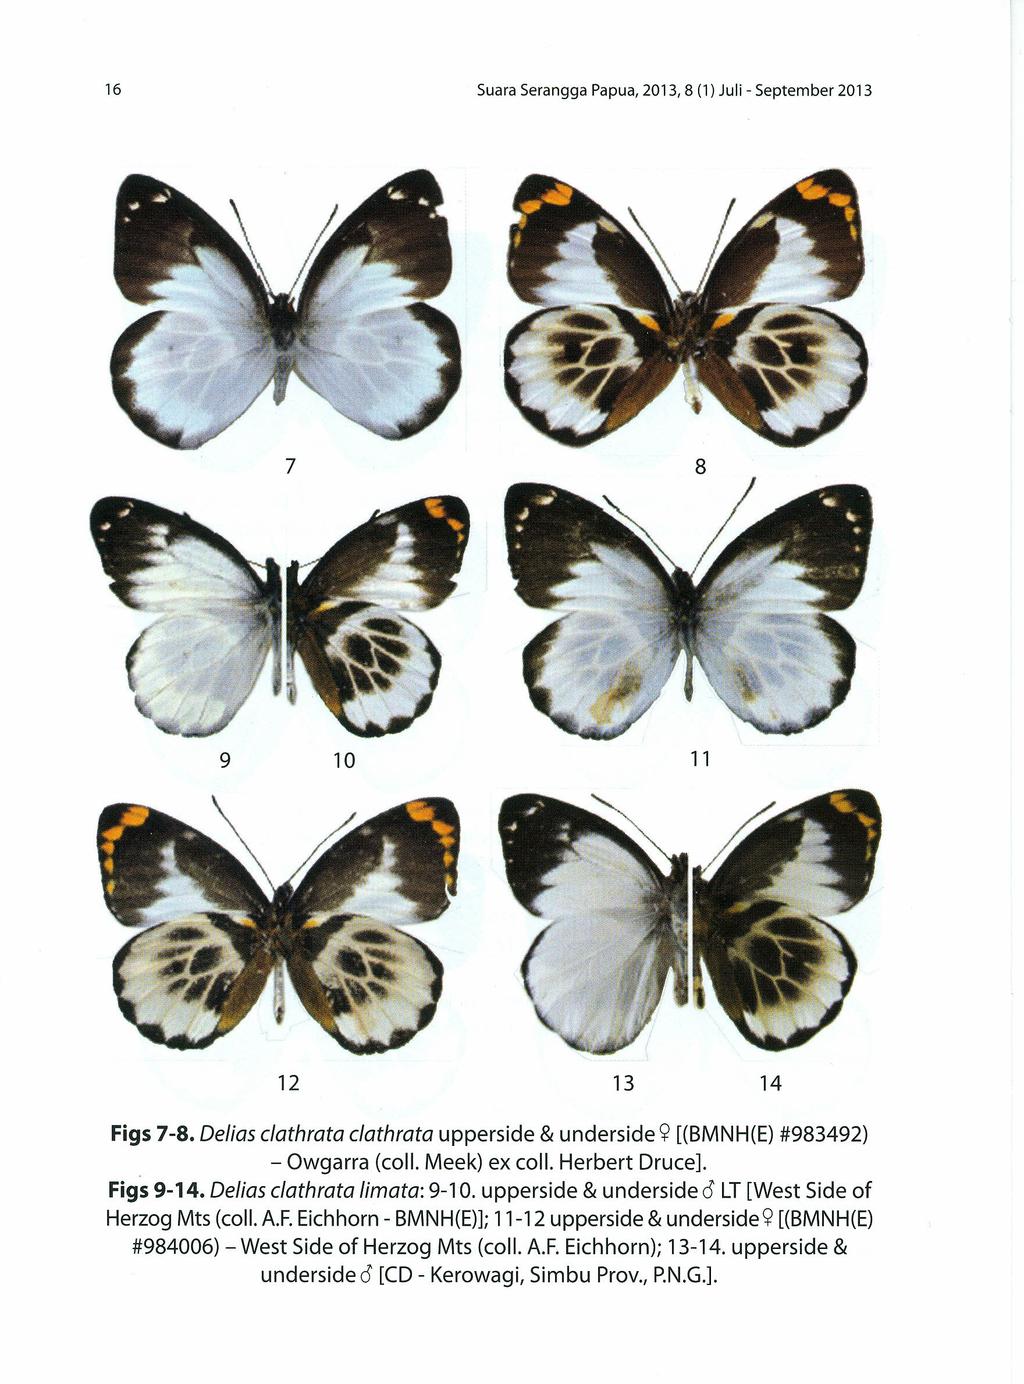 16 Suara Serangga Papua, 2013, 8 (1) Juli - September 2013 7 8 9 10 11 12 13 14 Figs 7-8. Oelias c/athrata c/athrata upperside & underside <;! [(BMNH(E) #983492) - Owgarra (coll, Meek) ex col I.